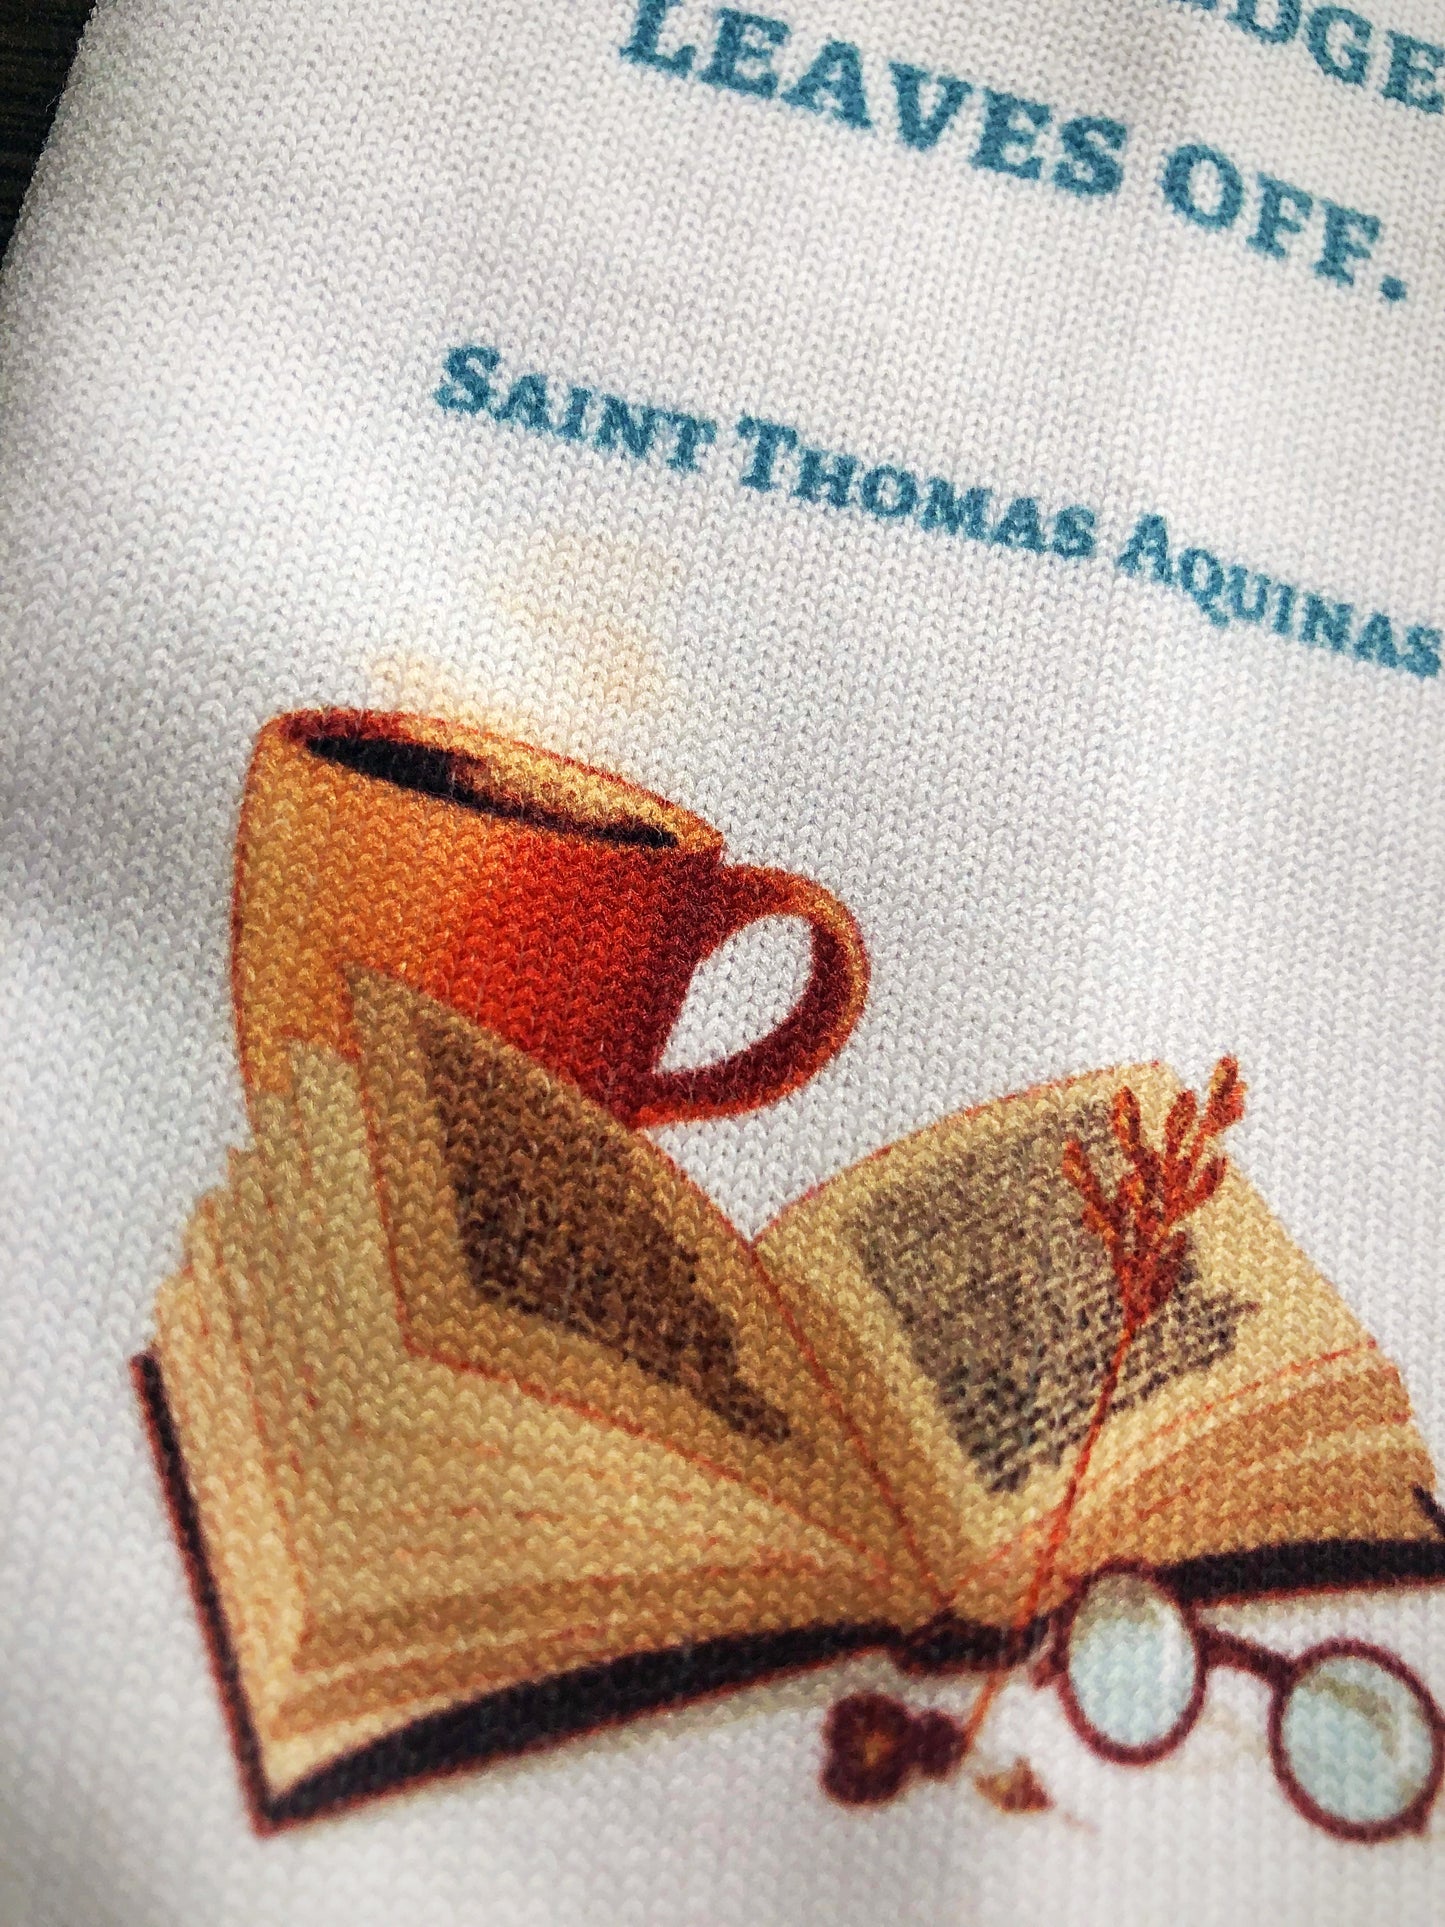 Catholic Men's socks - St. Thomas Aquinas quote